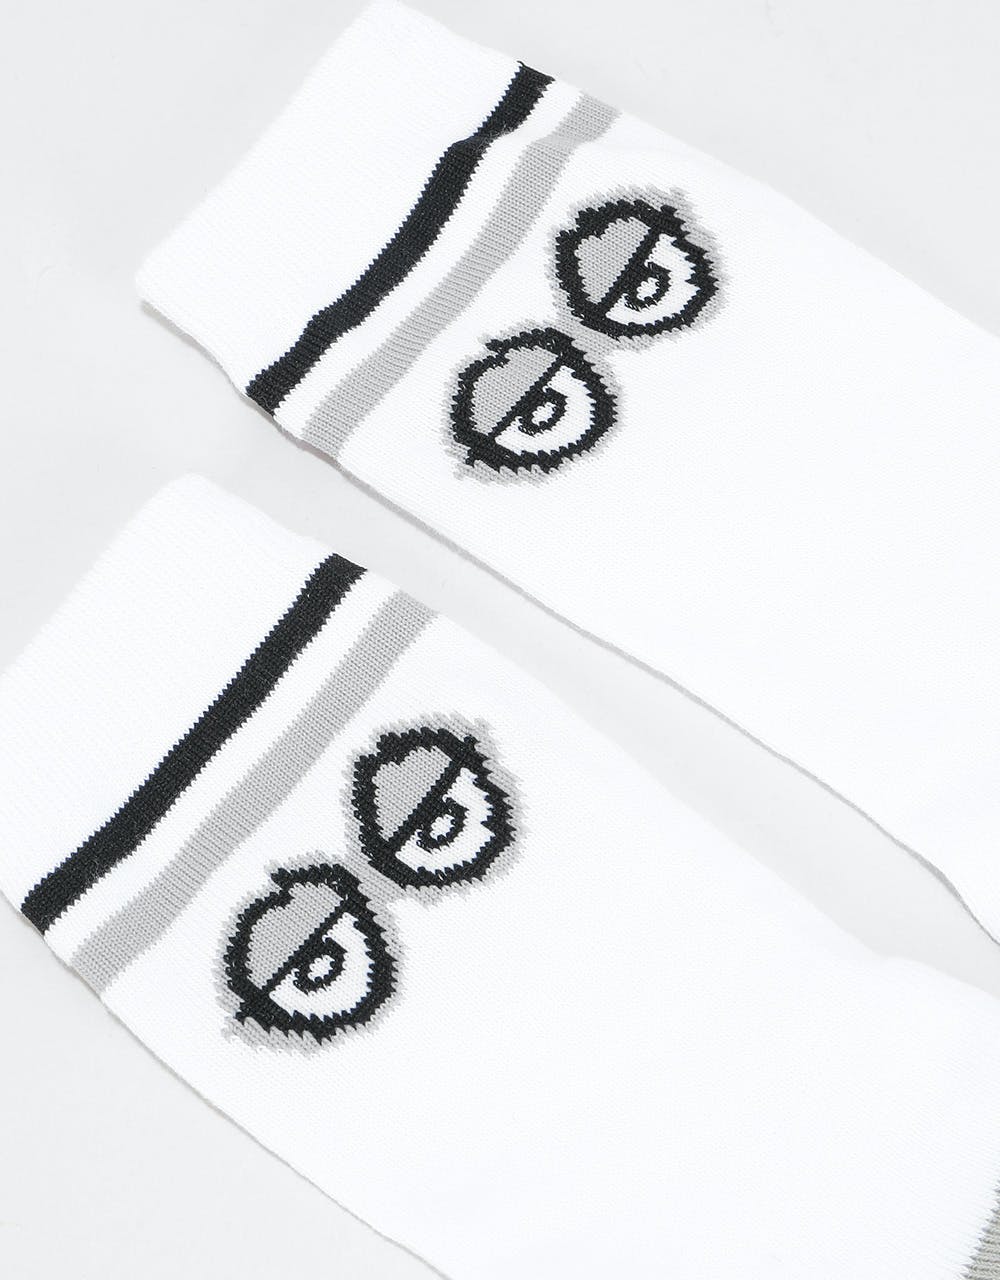 Krooked Big Eyes Socks - White/Grey/Black